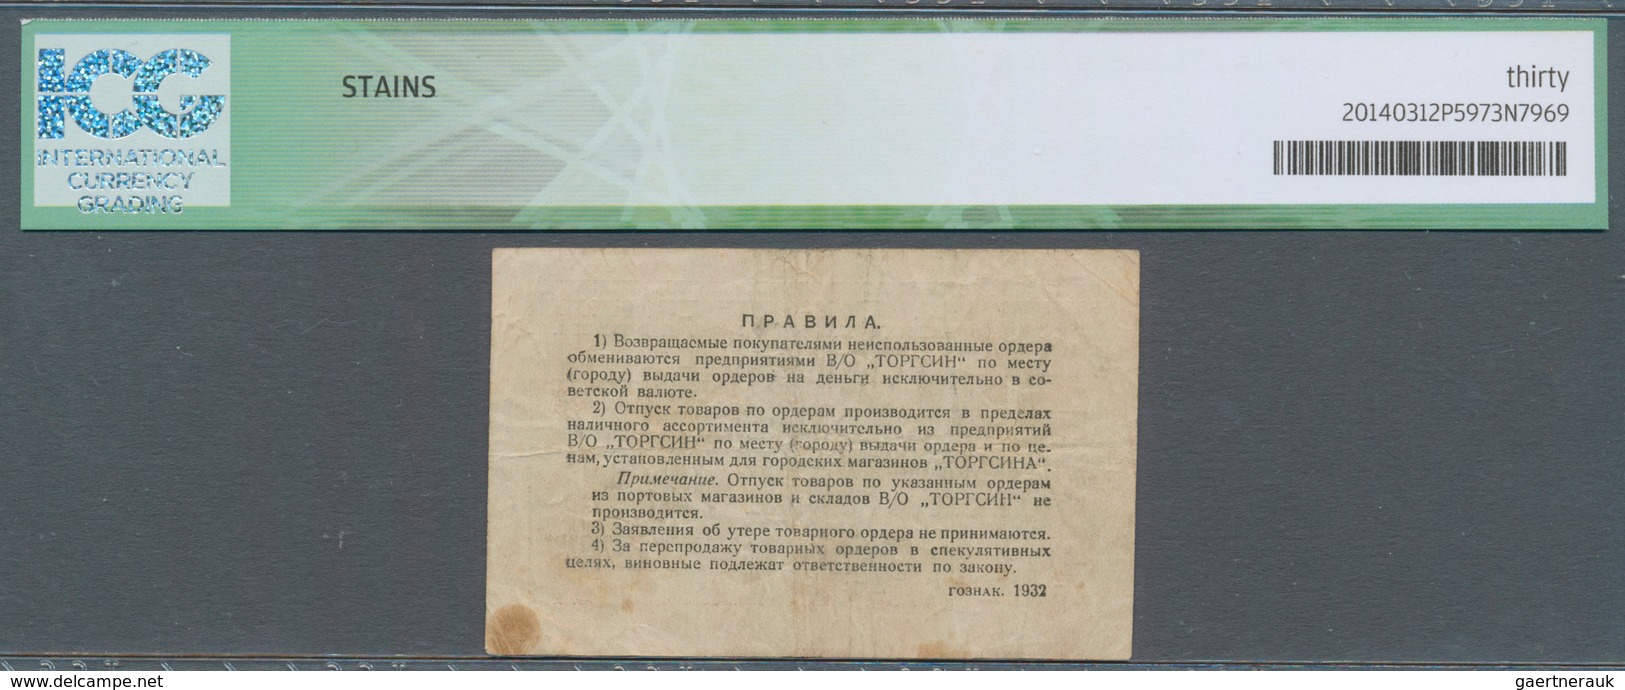 Russia / Russland: City Of Kharkov 1 Kopek 1932 P. NL In Condition: ICG Graded 30* VF. - Rusland